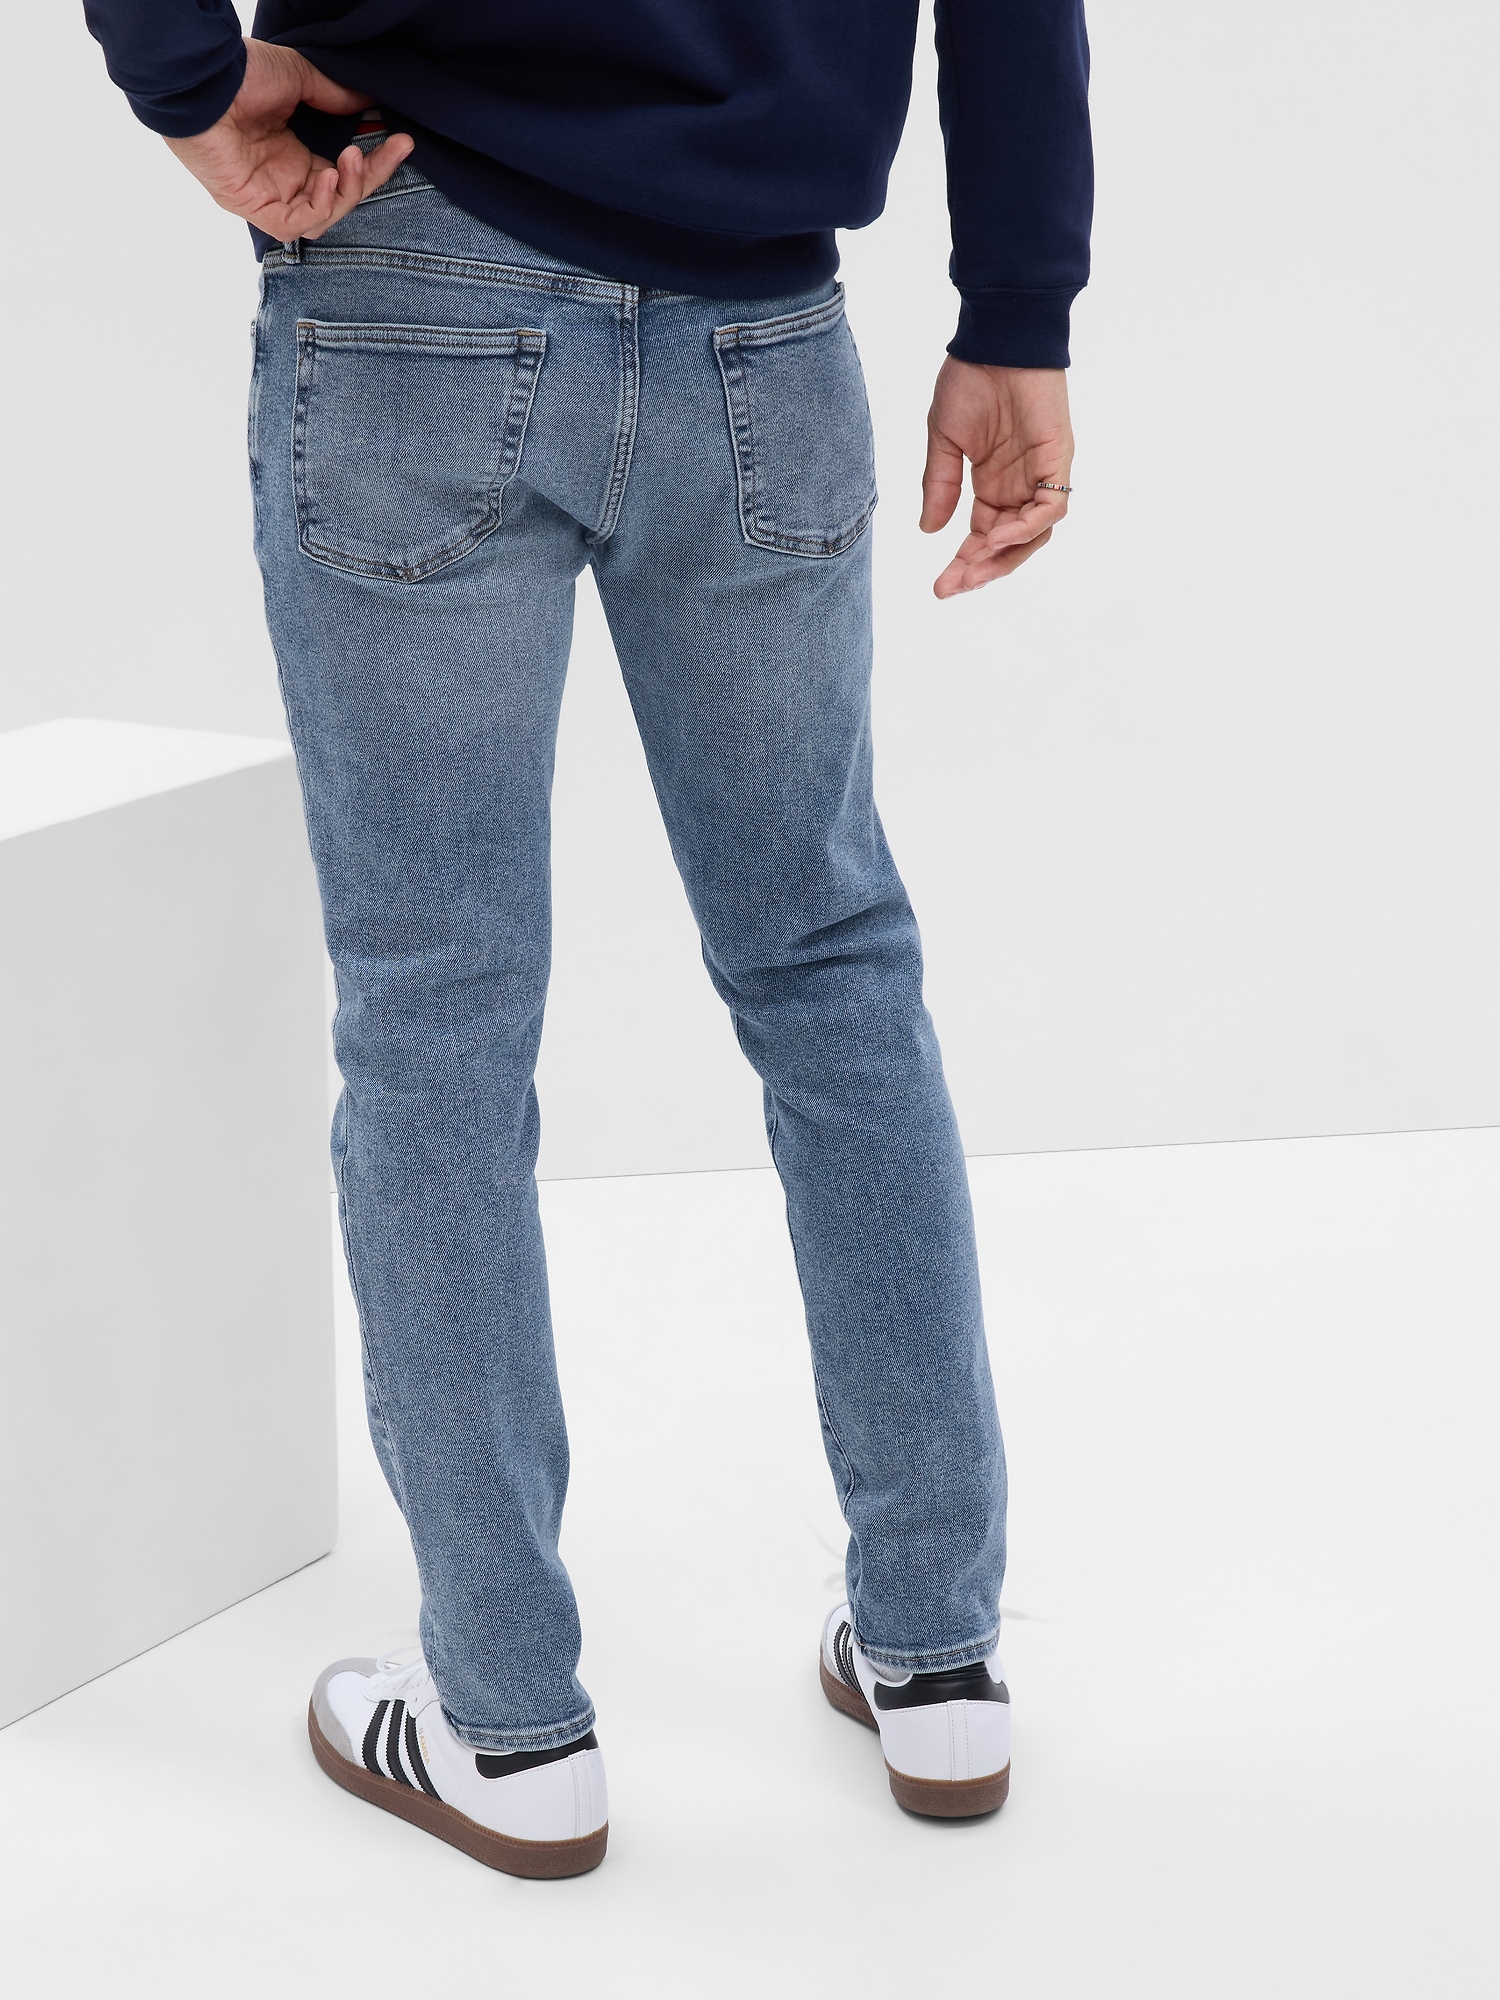 GAP Denim Jeans Review